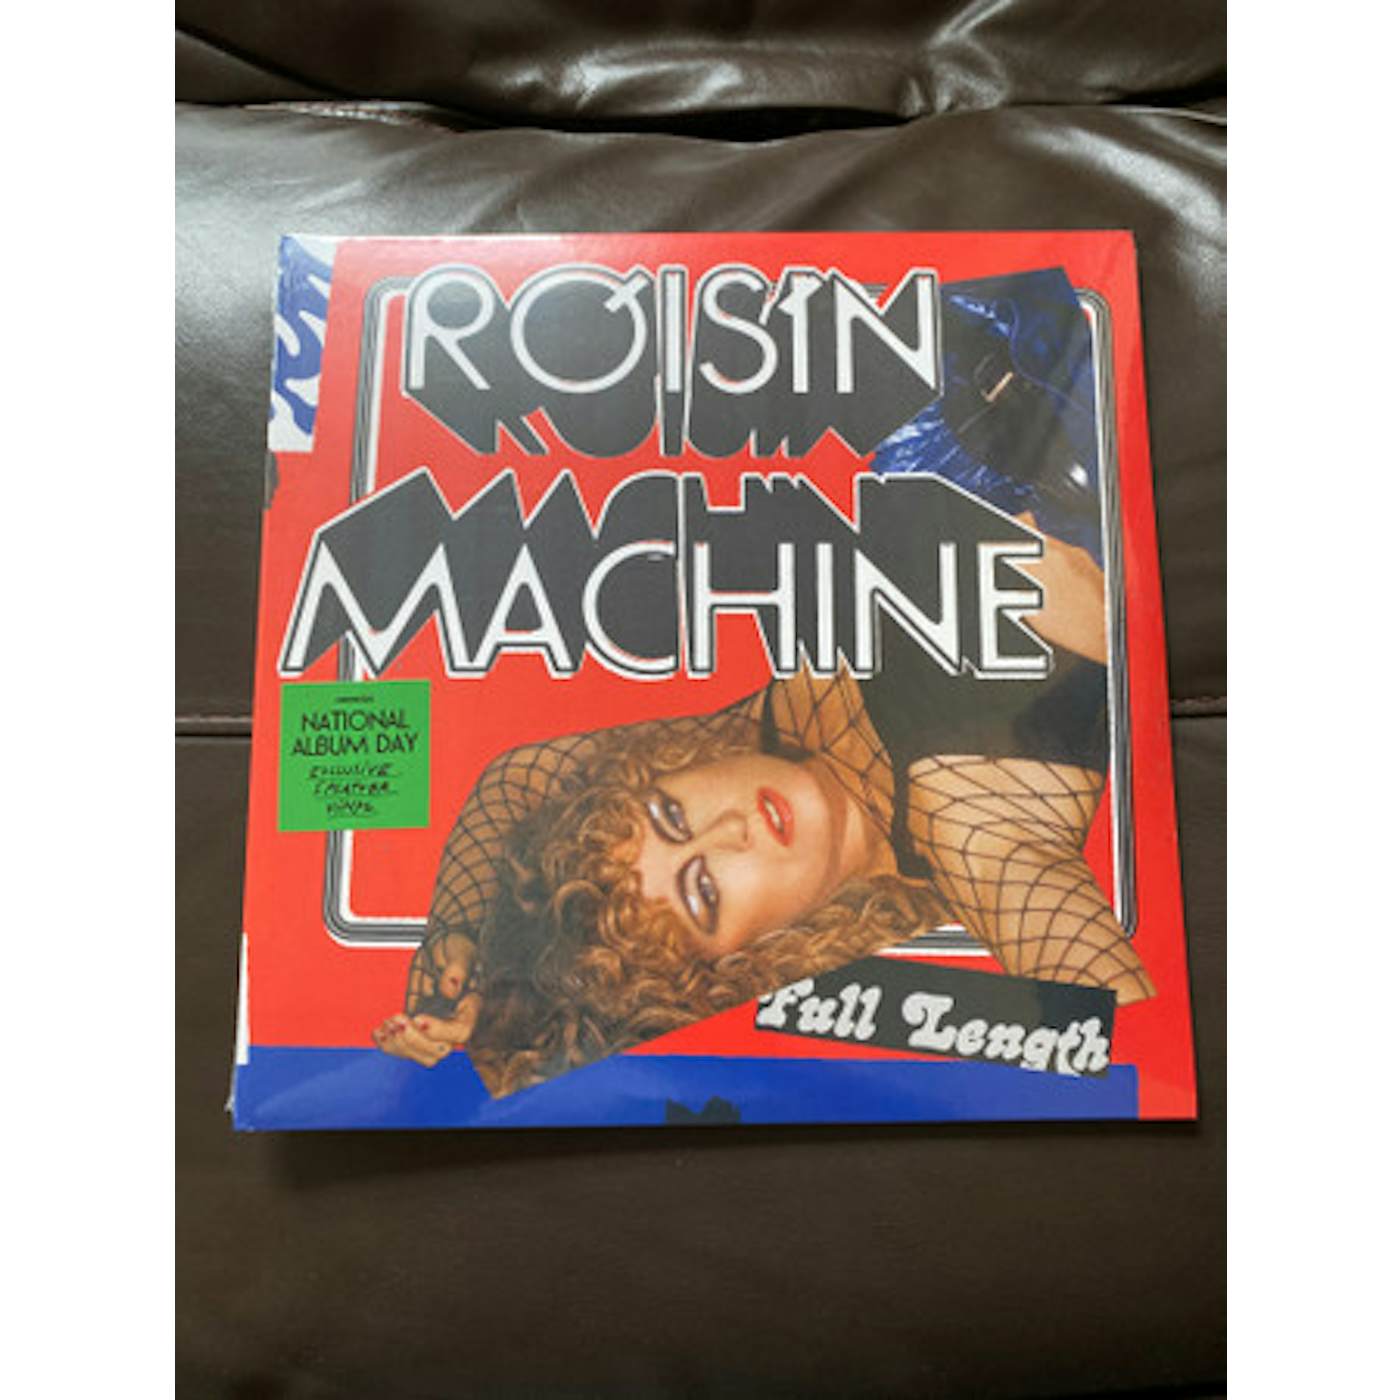 Róisín Murphy ROISIN MACHINE Vinyl Record